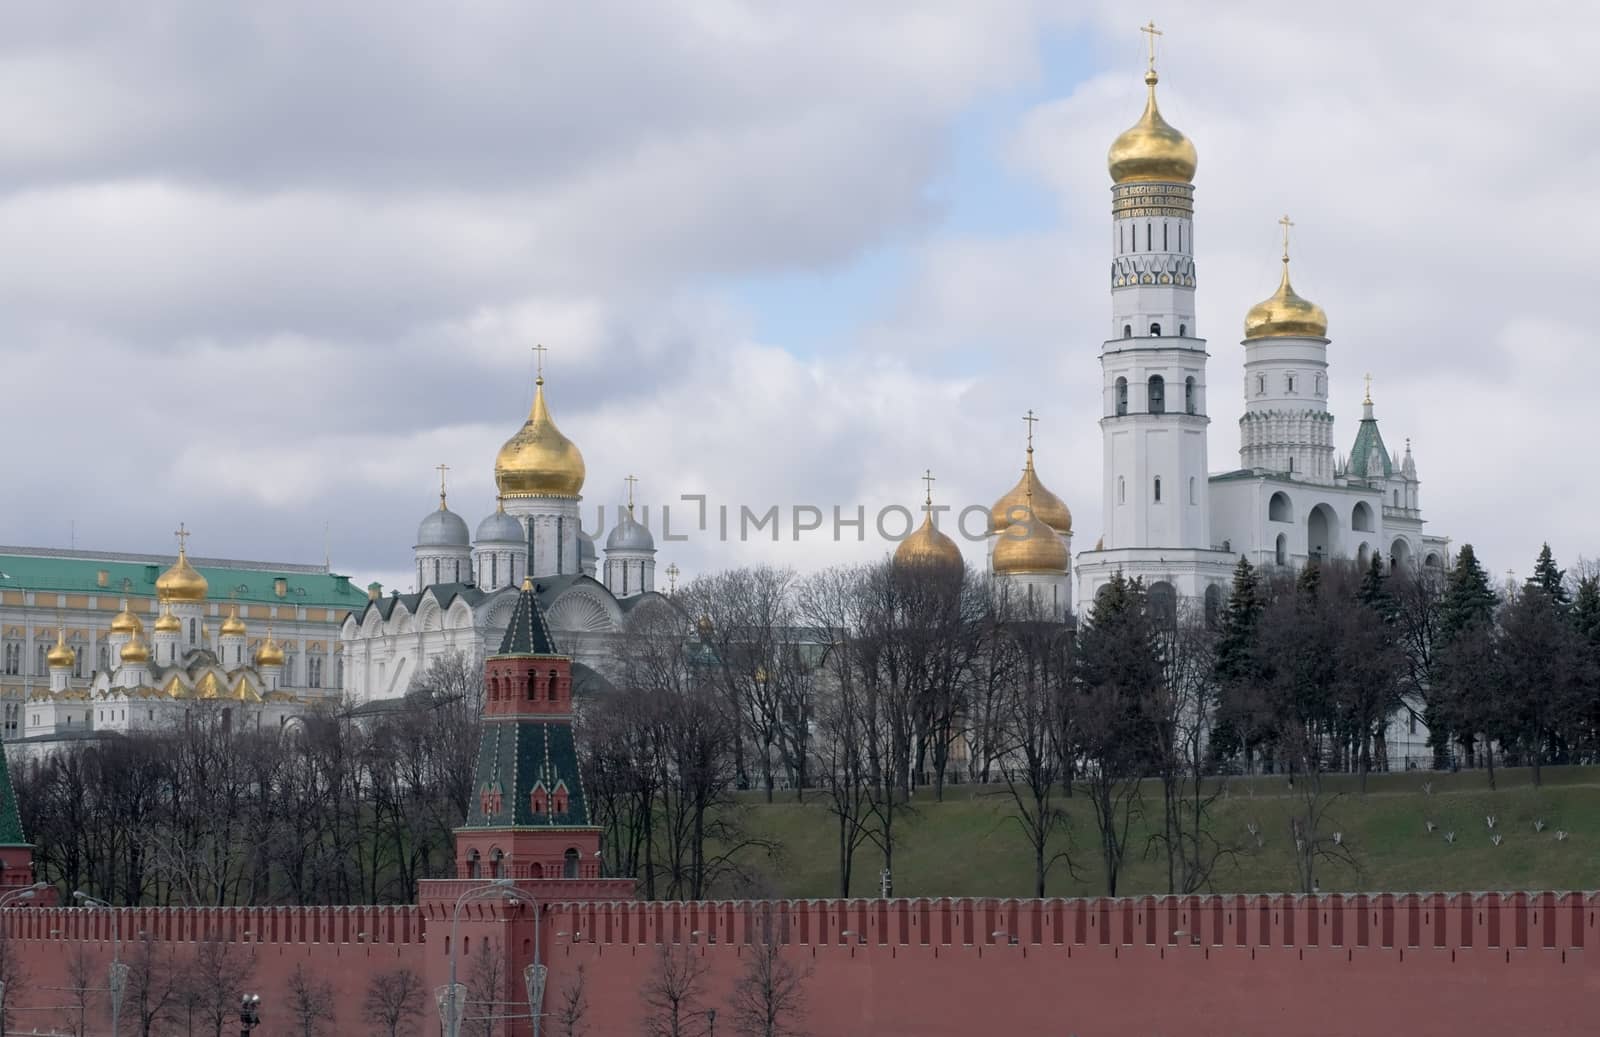  Kremlin cathedrals by glassbear